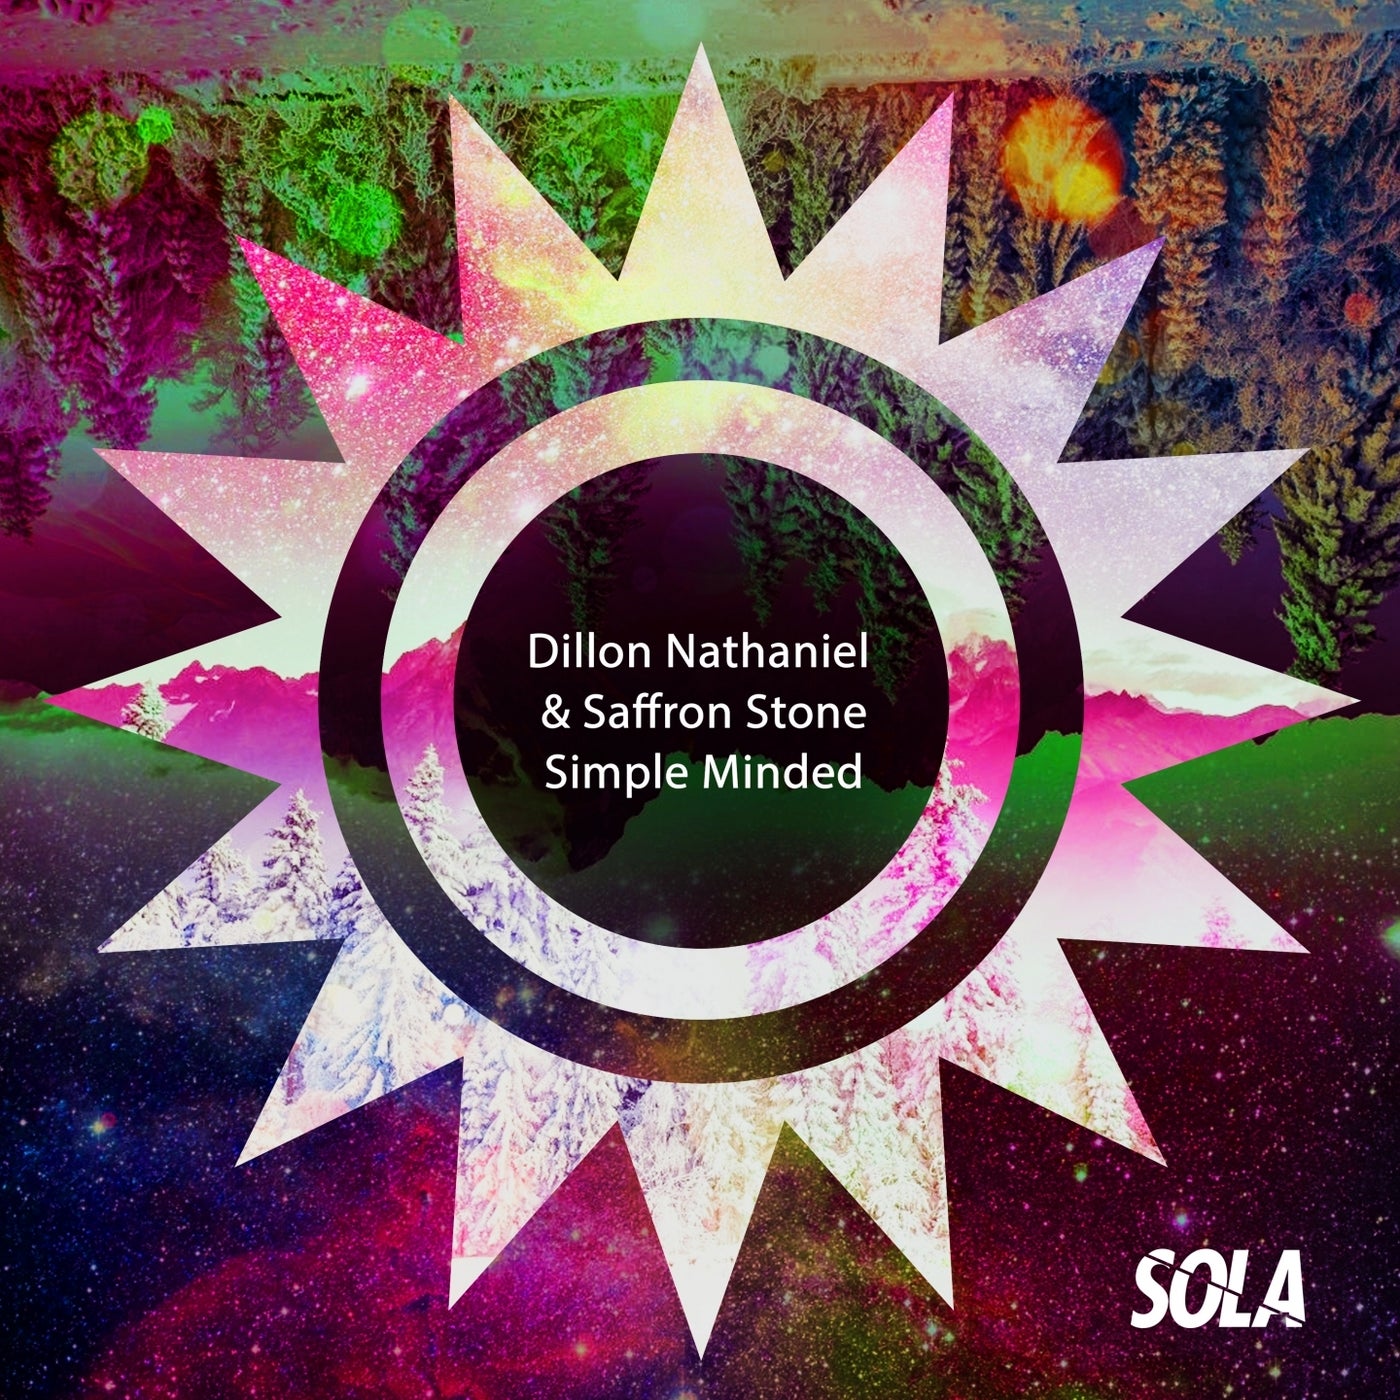 Download Dillon Nathaniel, Saffron Stone - Simple Minded on Electrobuzz